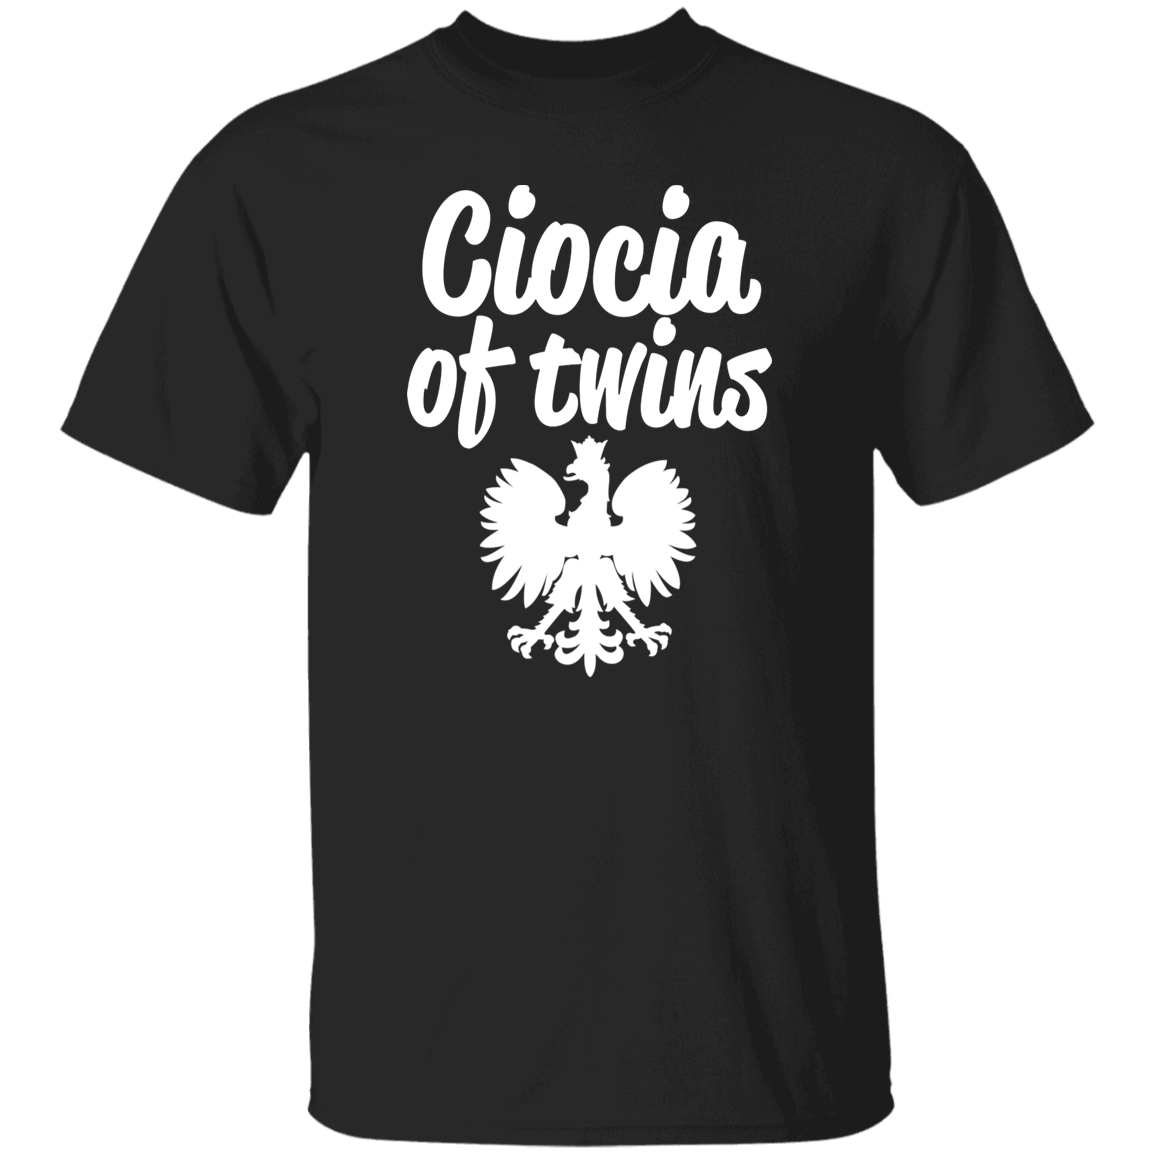 Ciocia of Twins Apparel CustomCat G500 5.3 oz. T-Shirt Black S